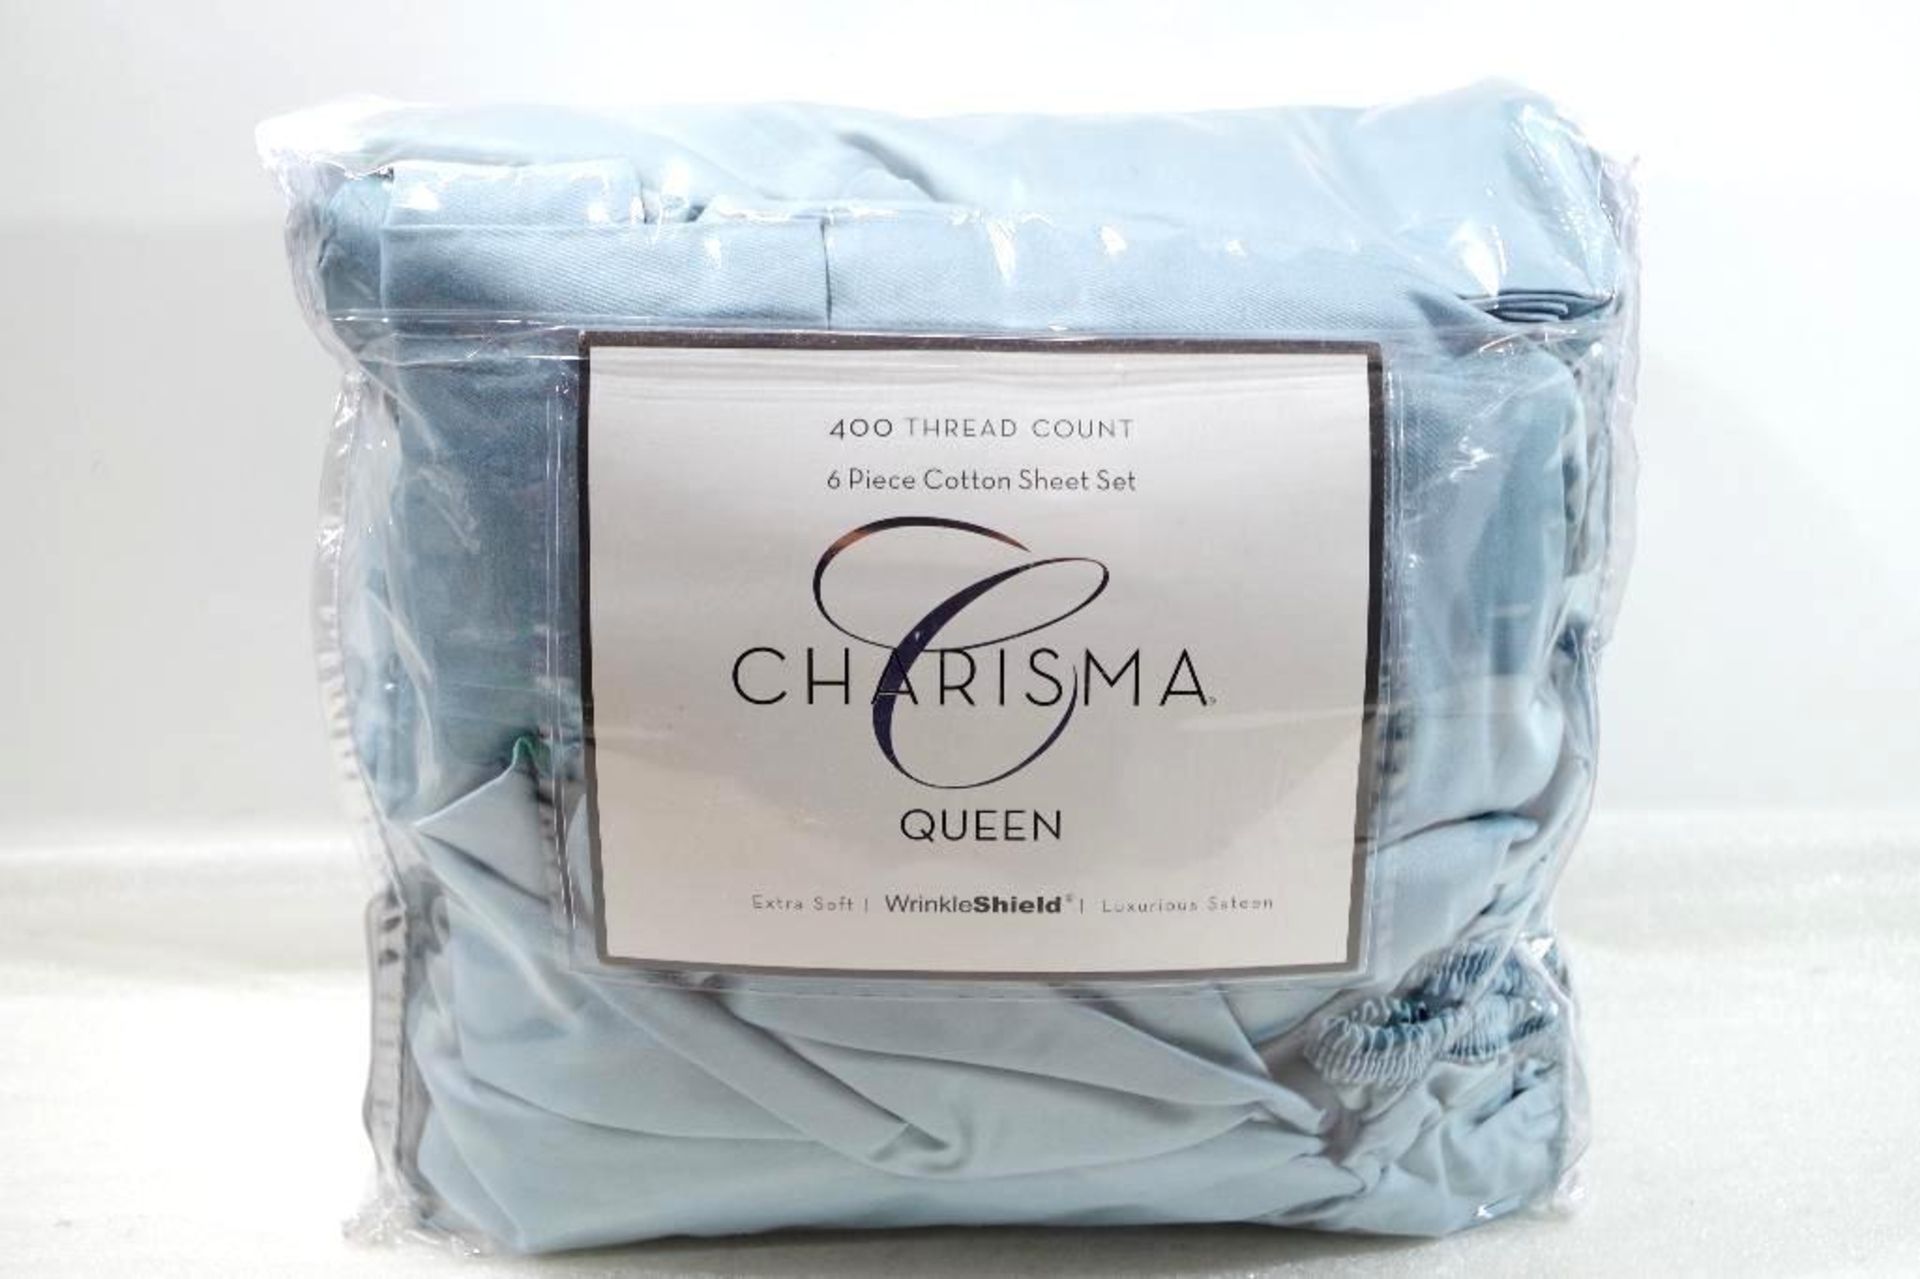 CHARISMA Queen 6-Piece Cotton Sheet Set, Store Return